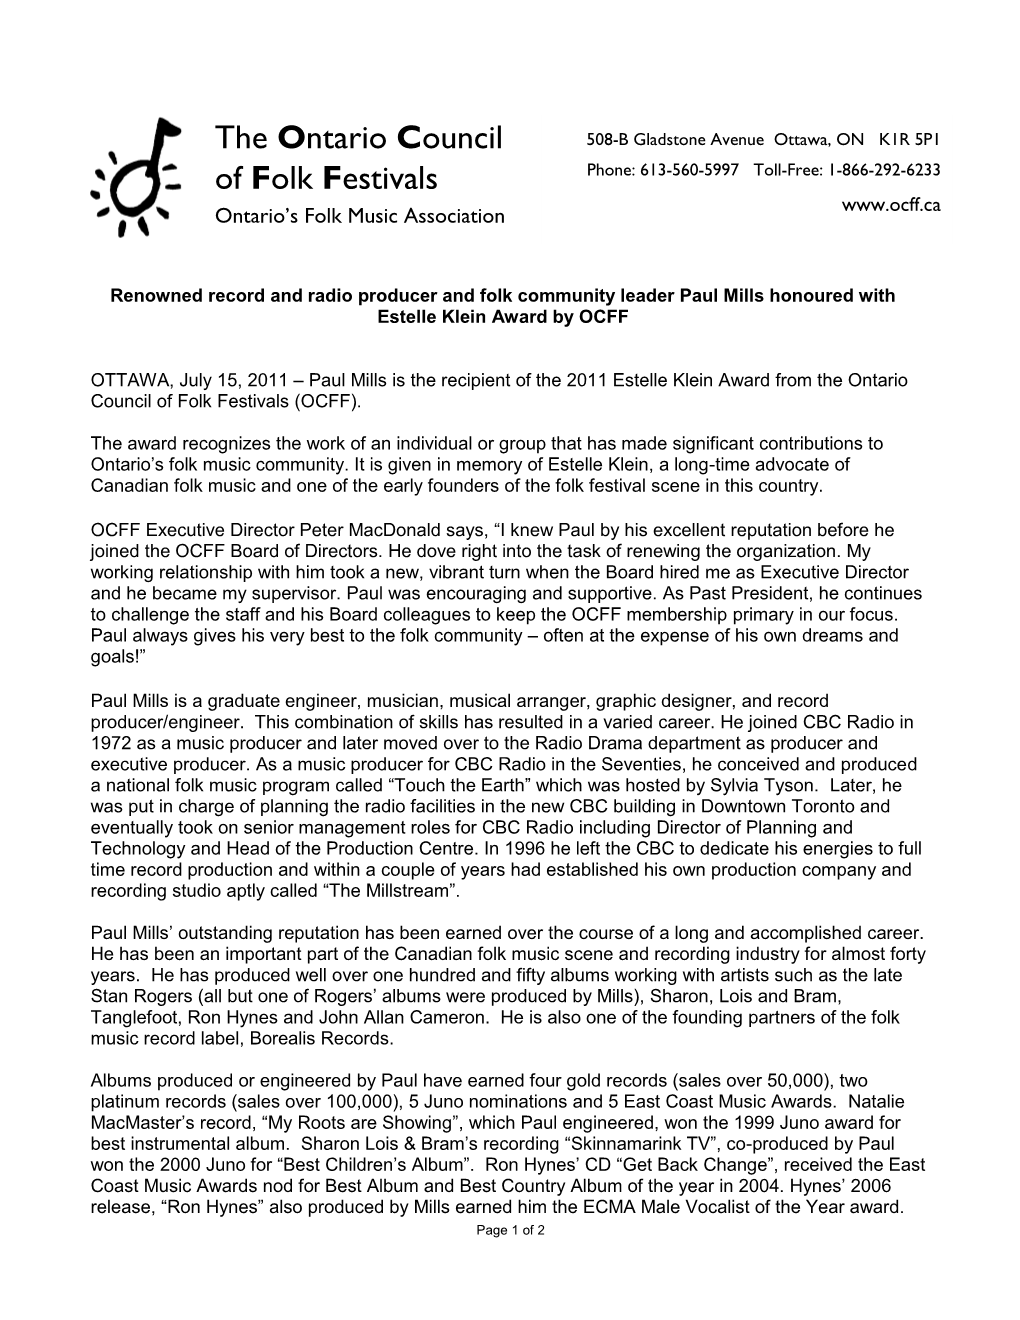 The Ontario Council of Folk Festivals (OCFF)